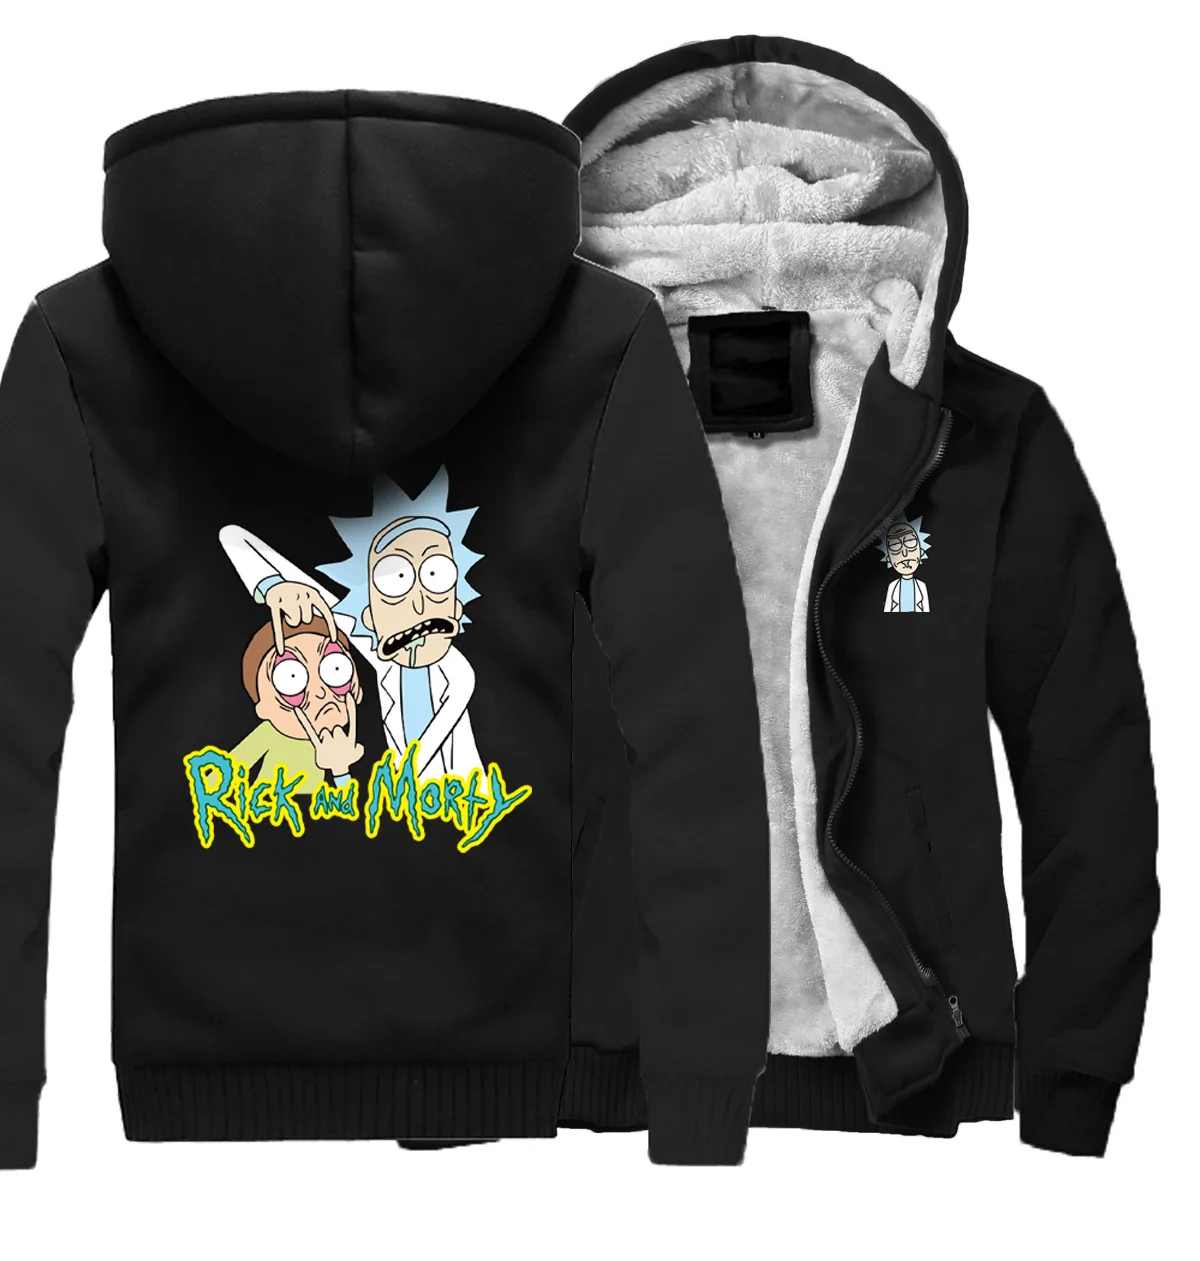 New Rick and Morty Coat Jacket